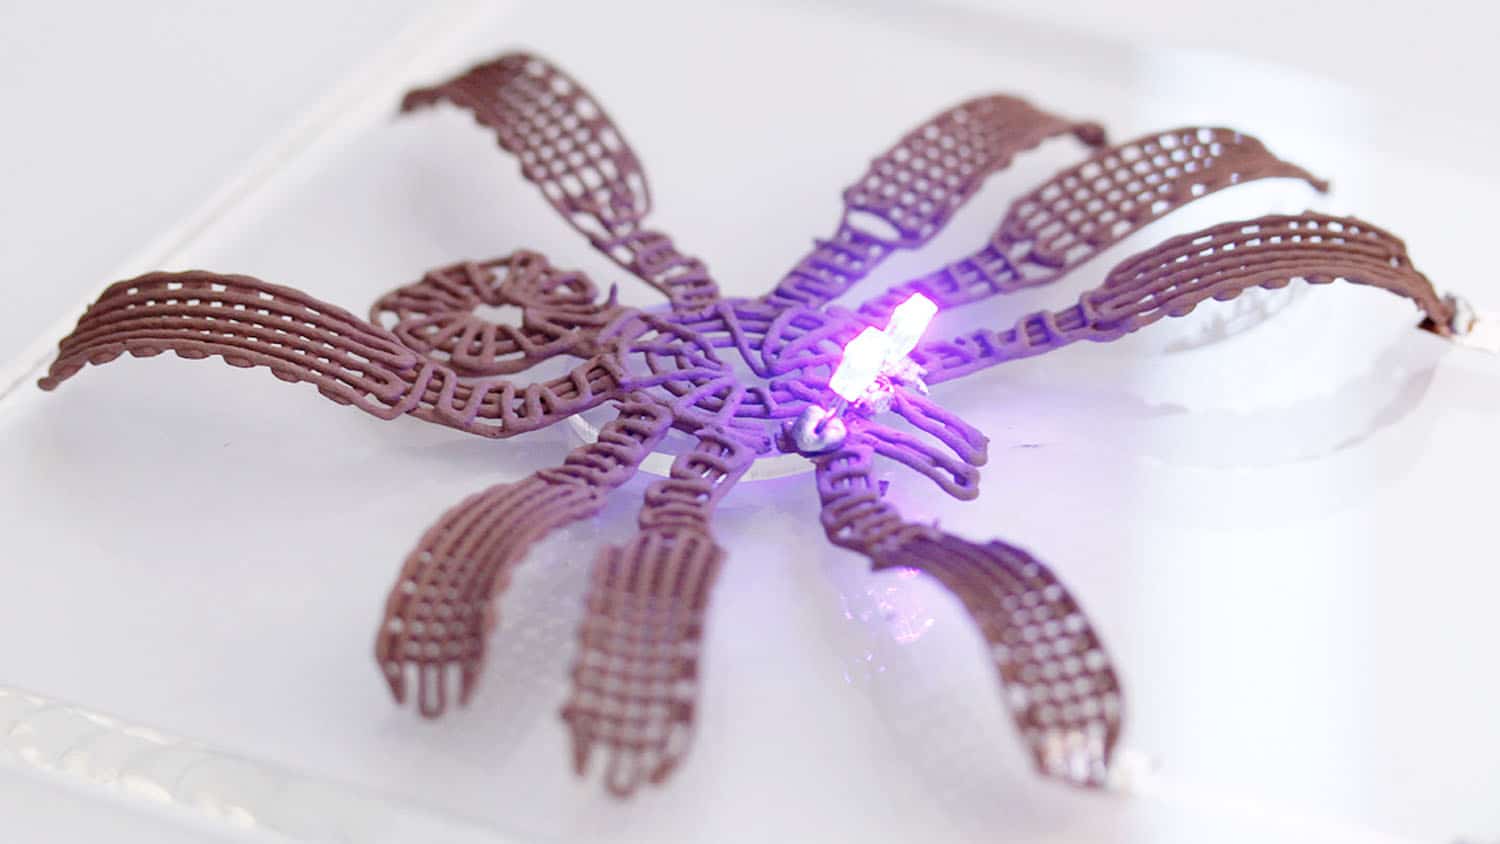 Metal 3D Printing: Introducing a Gel for Room Temperature Printing of Heat-Sensitive Electronics